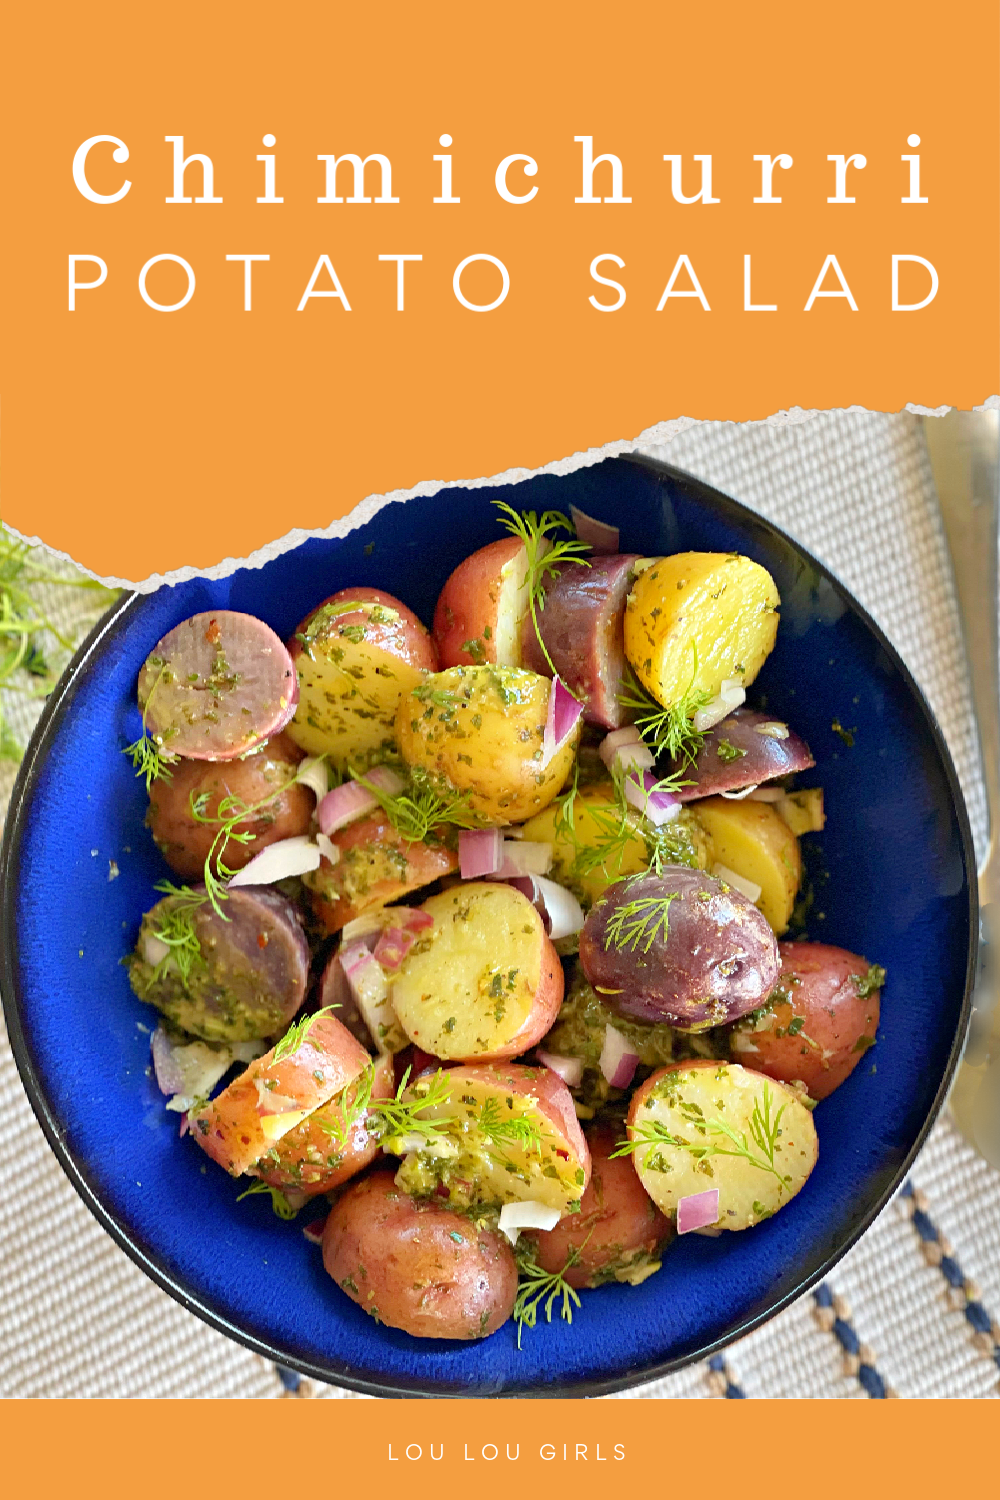 Chimichurri Potato Salad